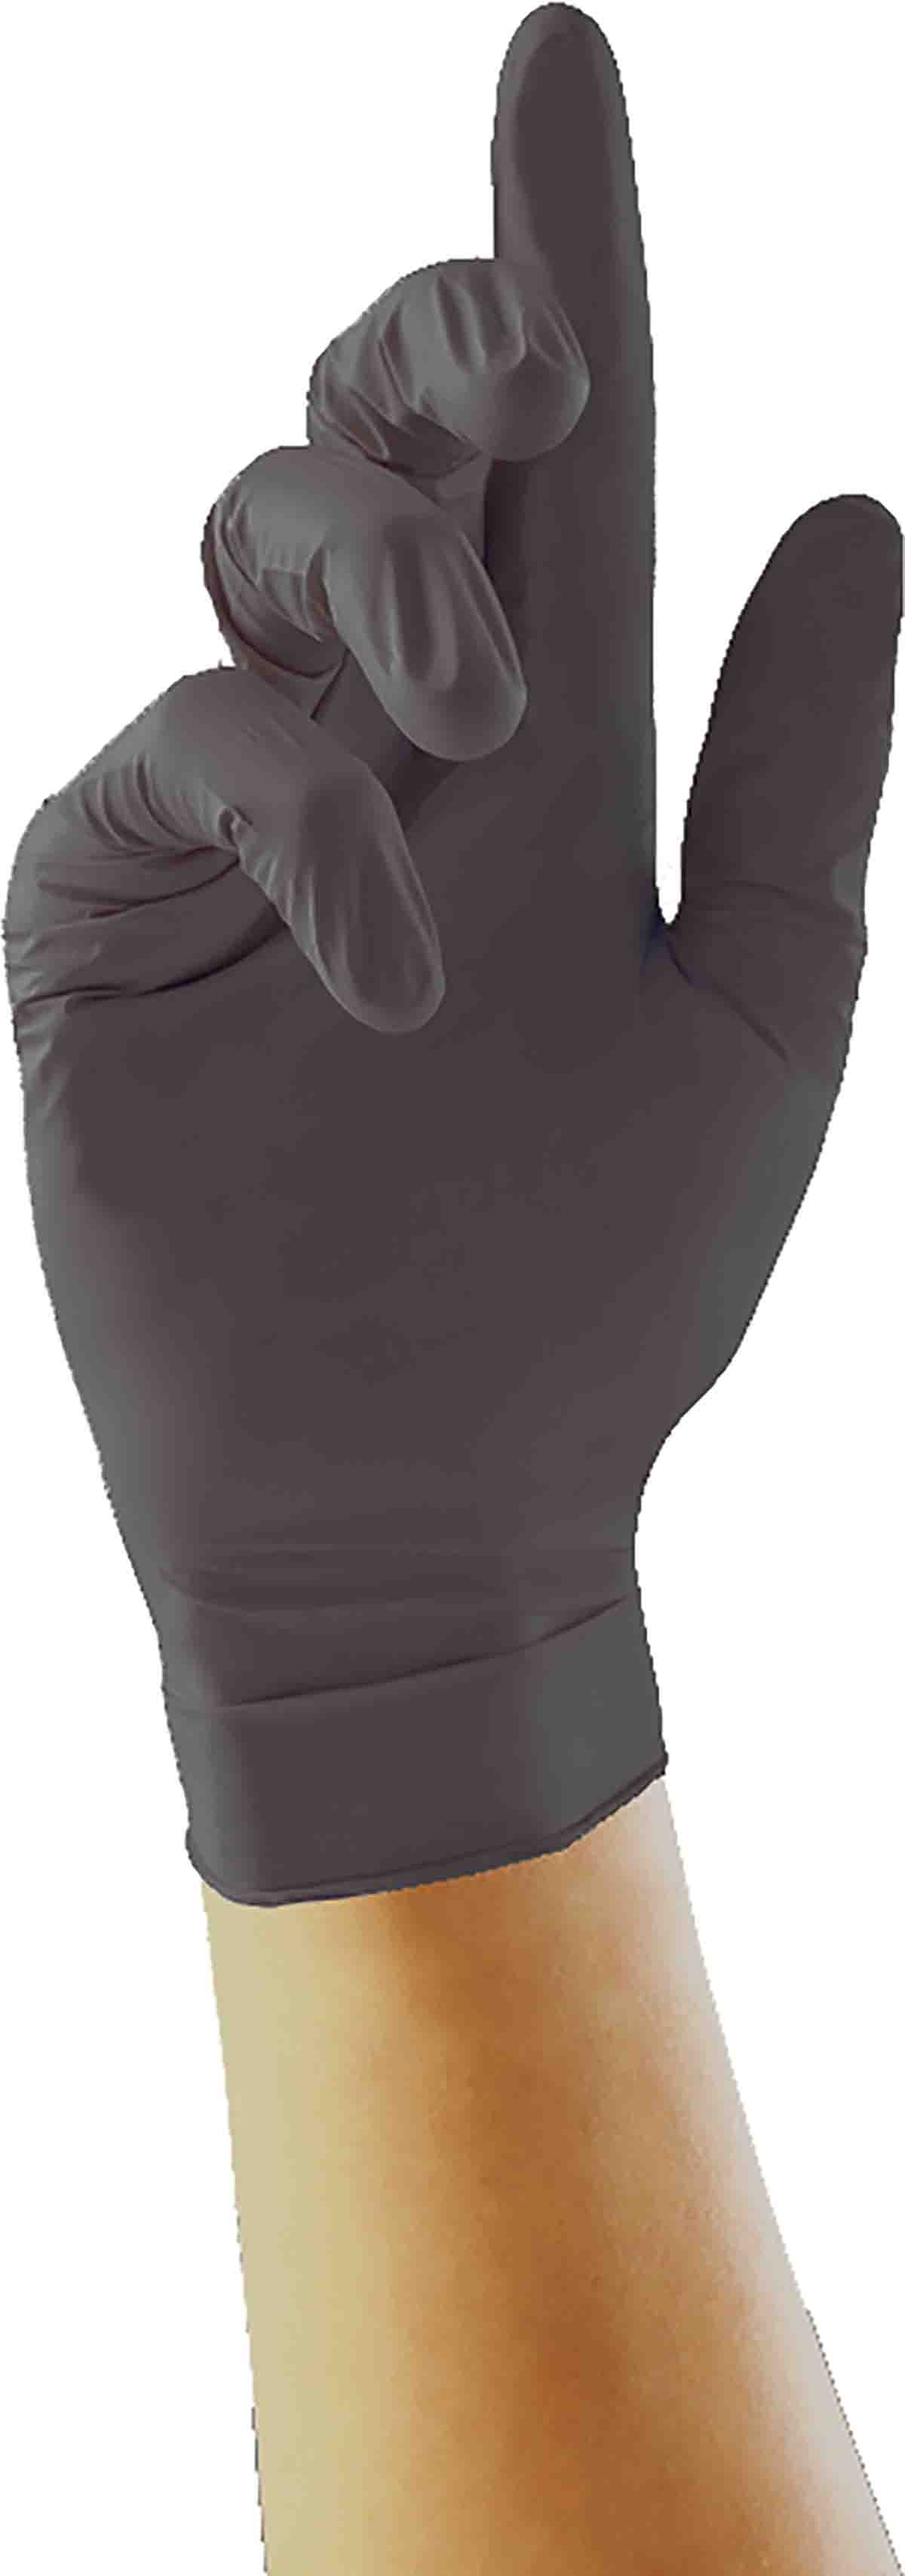 Uniglove Black Powder-Free Nitrile Gloves, Size 7, Small, 100 per Pack